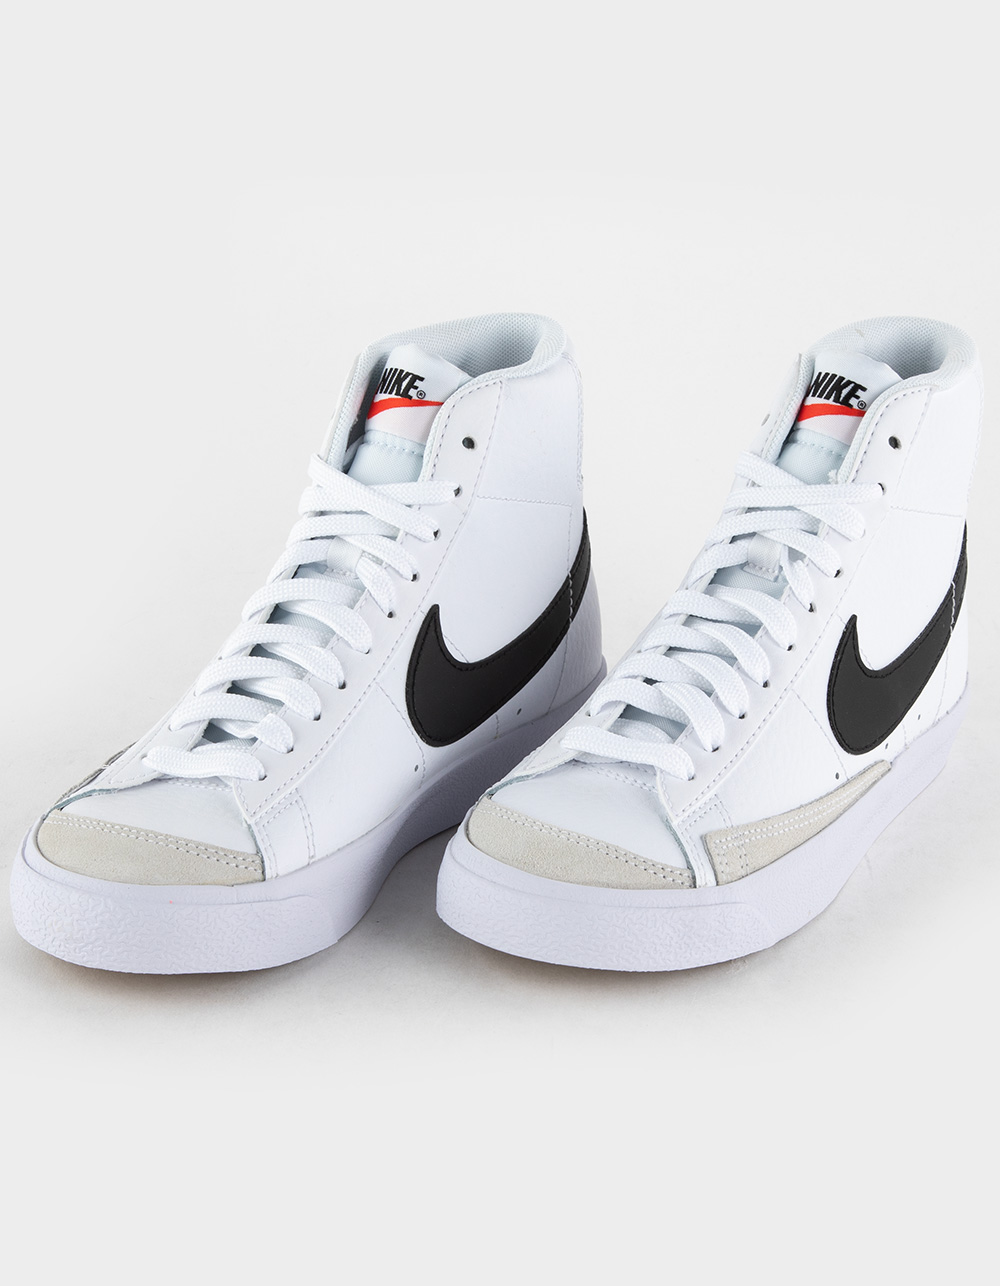 Nike Blazer Low Top Shoes.